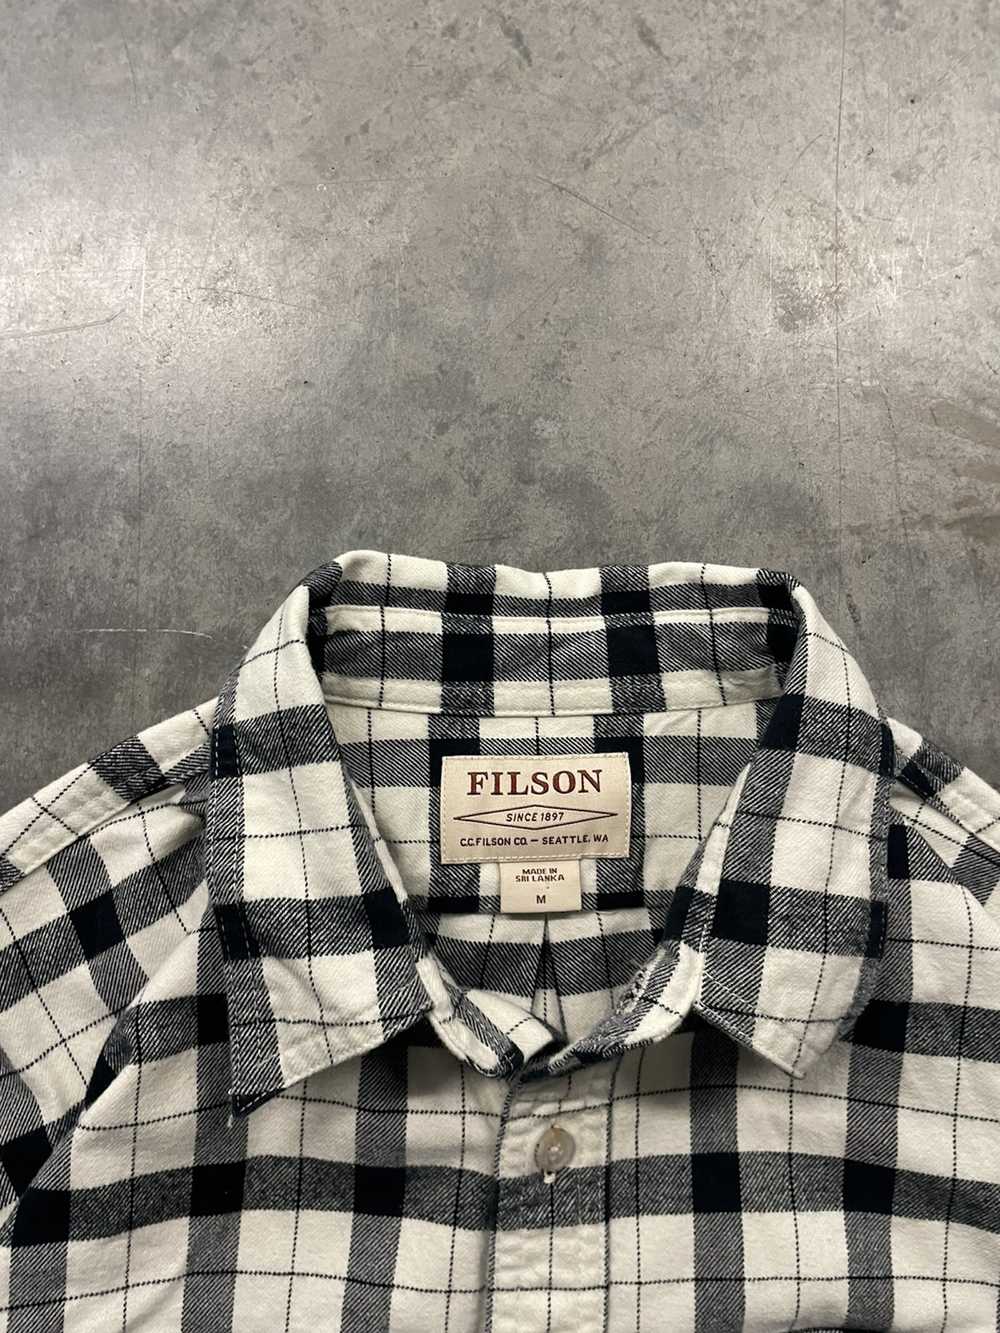 Filson Filson Alaskan Guide Shirt - image 3